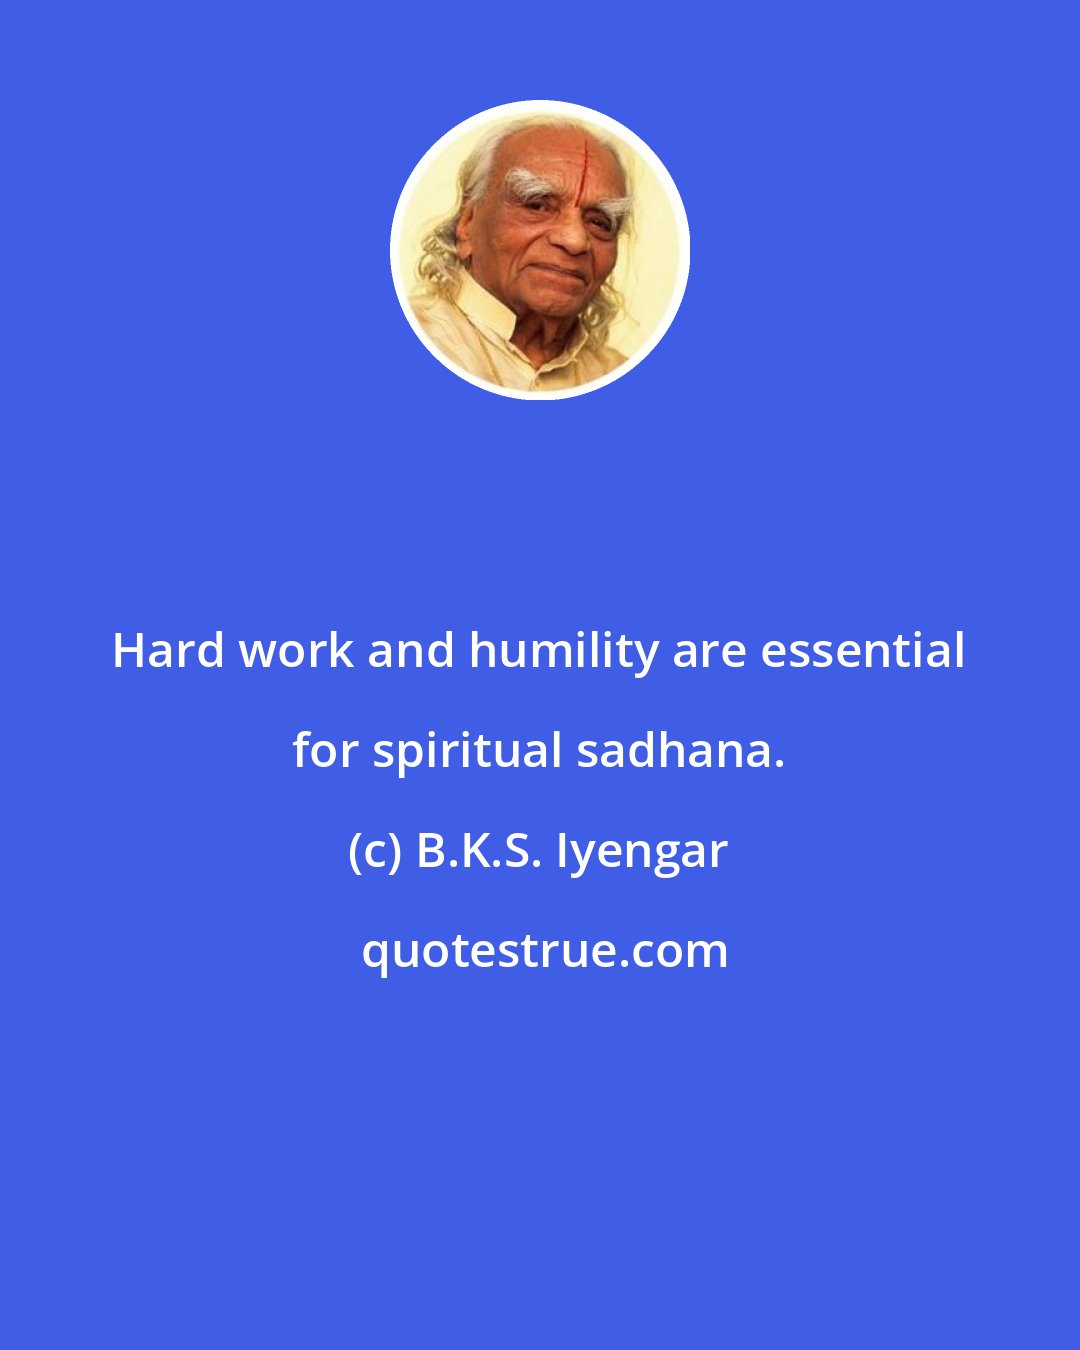 B.K.S. Iyengar: Hard work and humility are essential for spiritual sadhana.